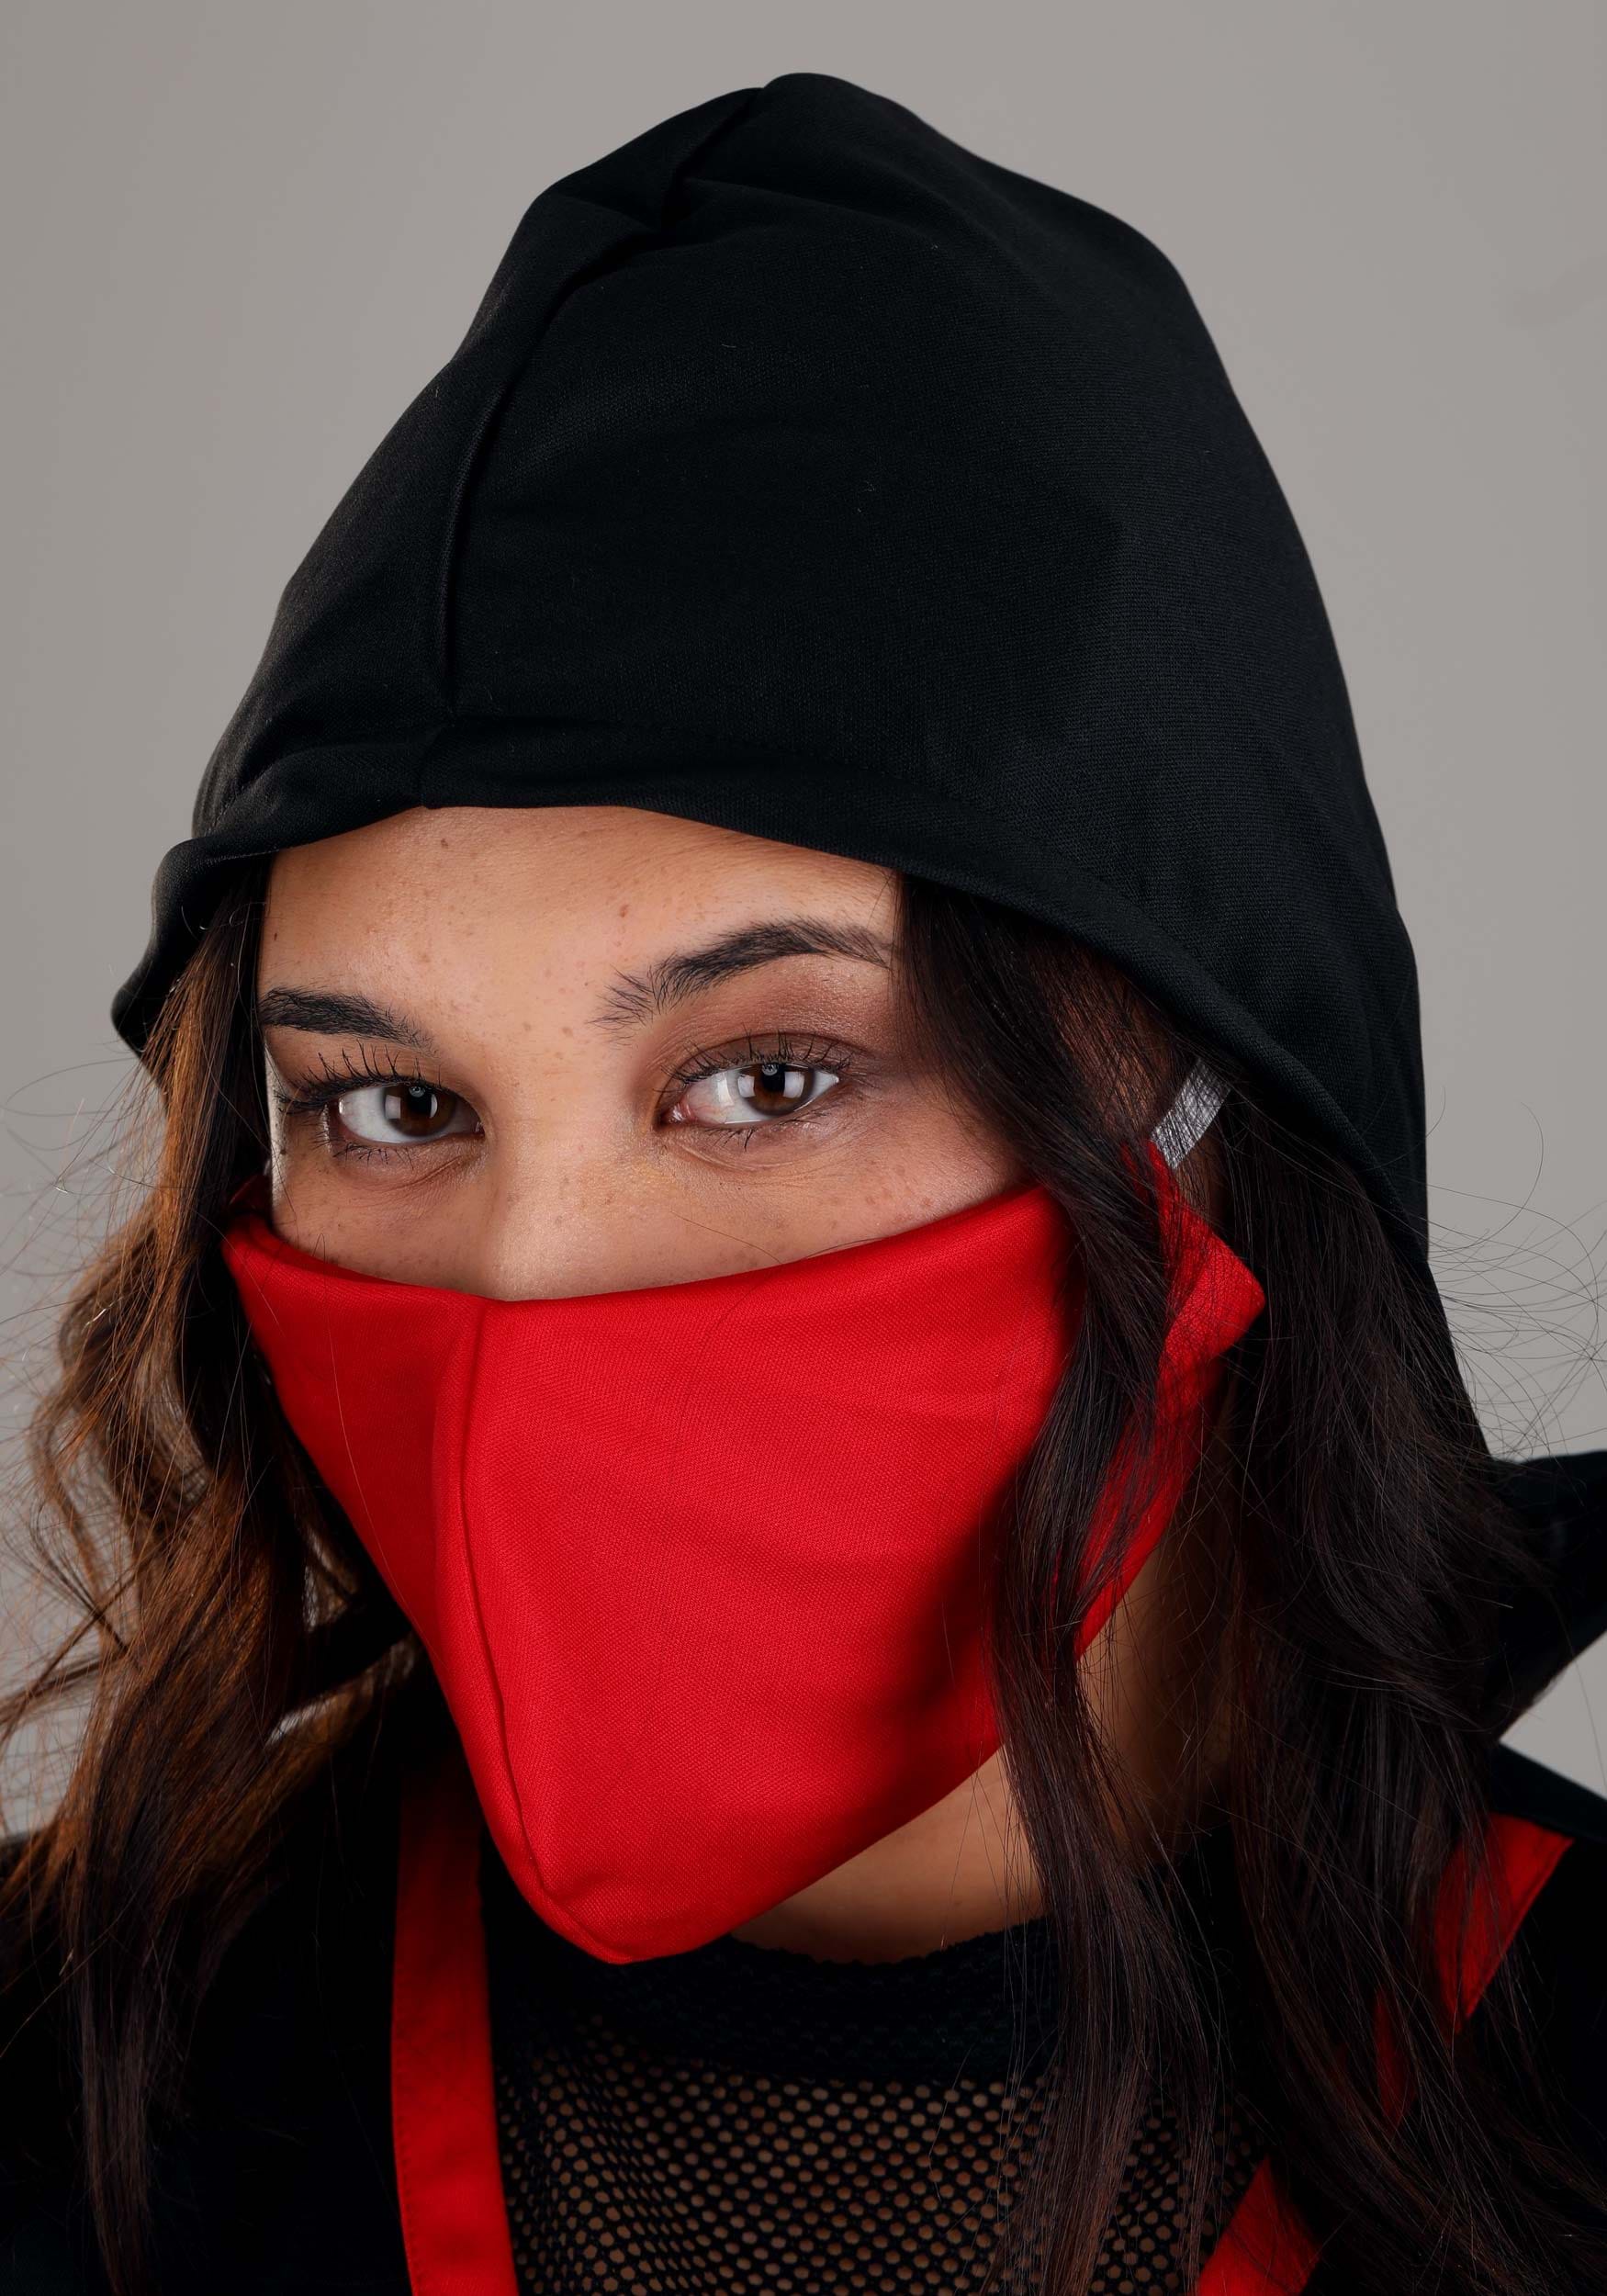 Plus Size Stealth Ninja Women's Costume